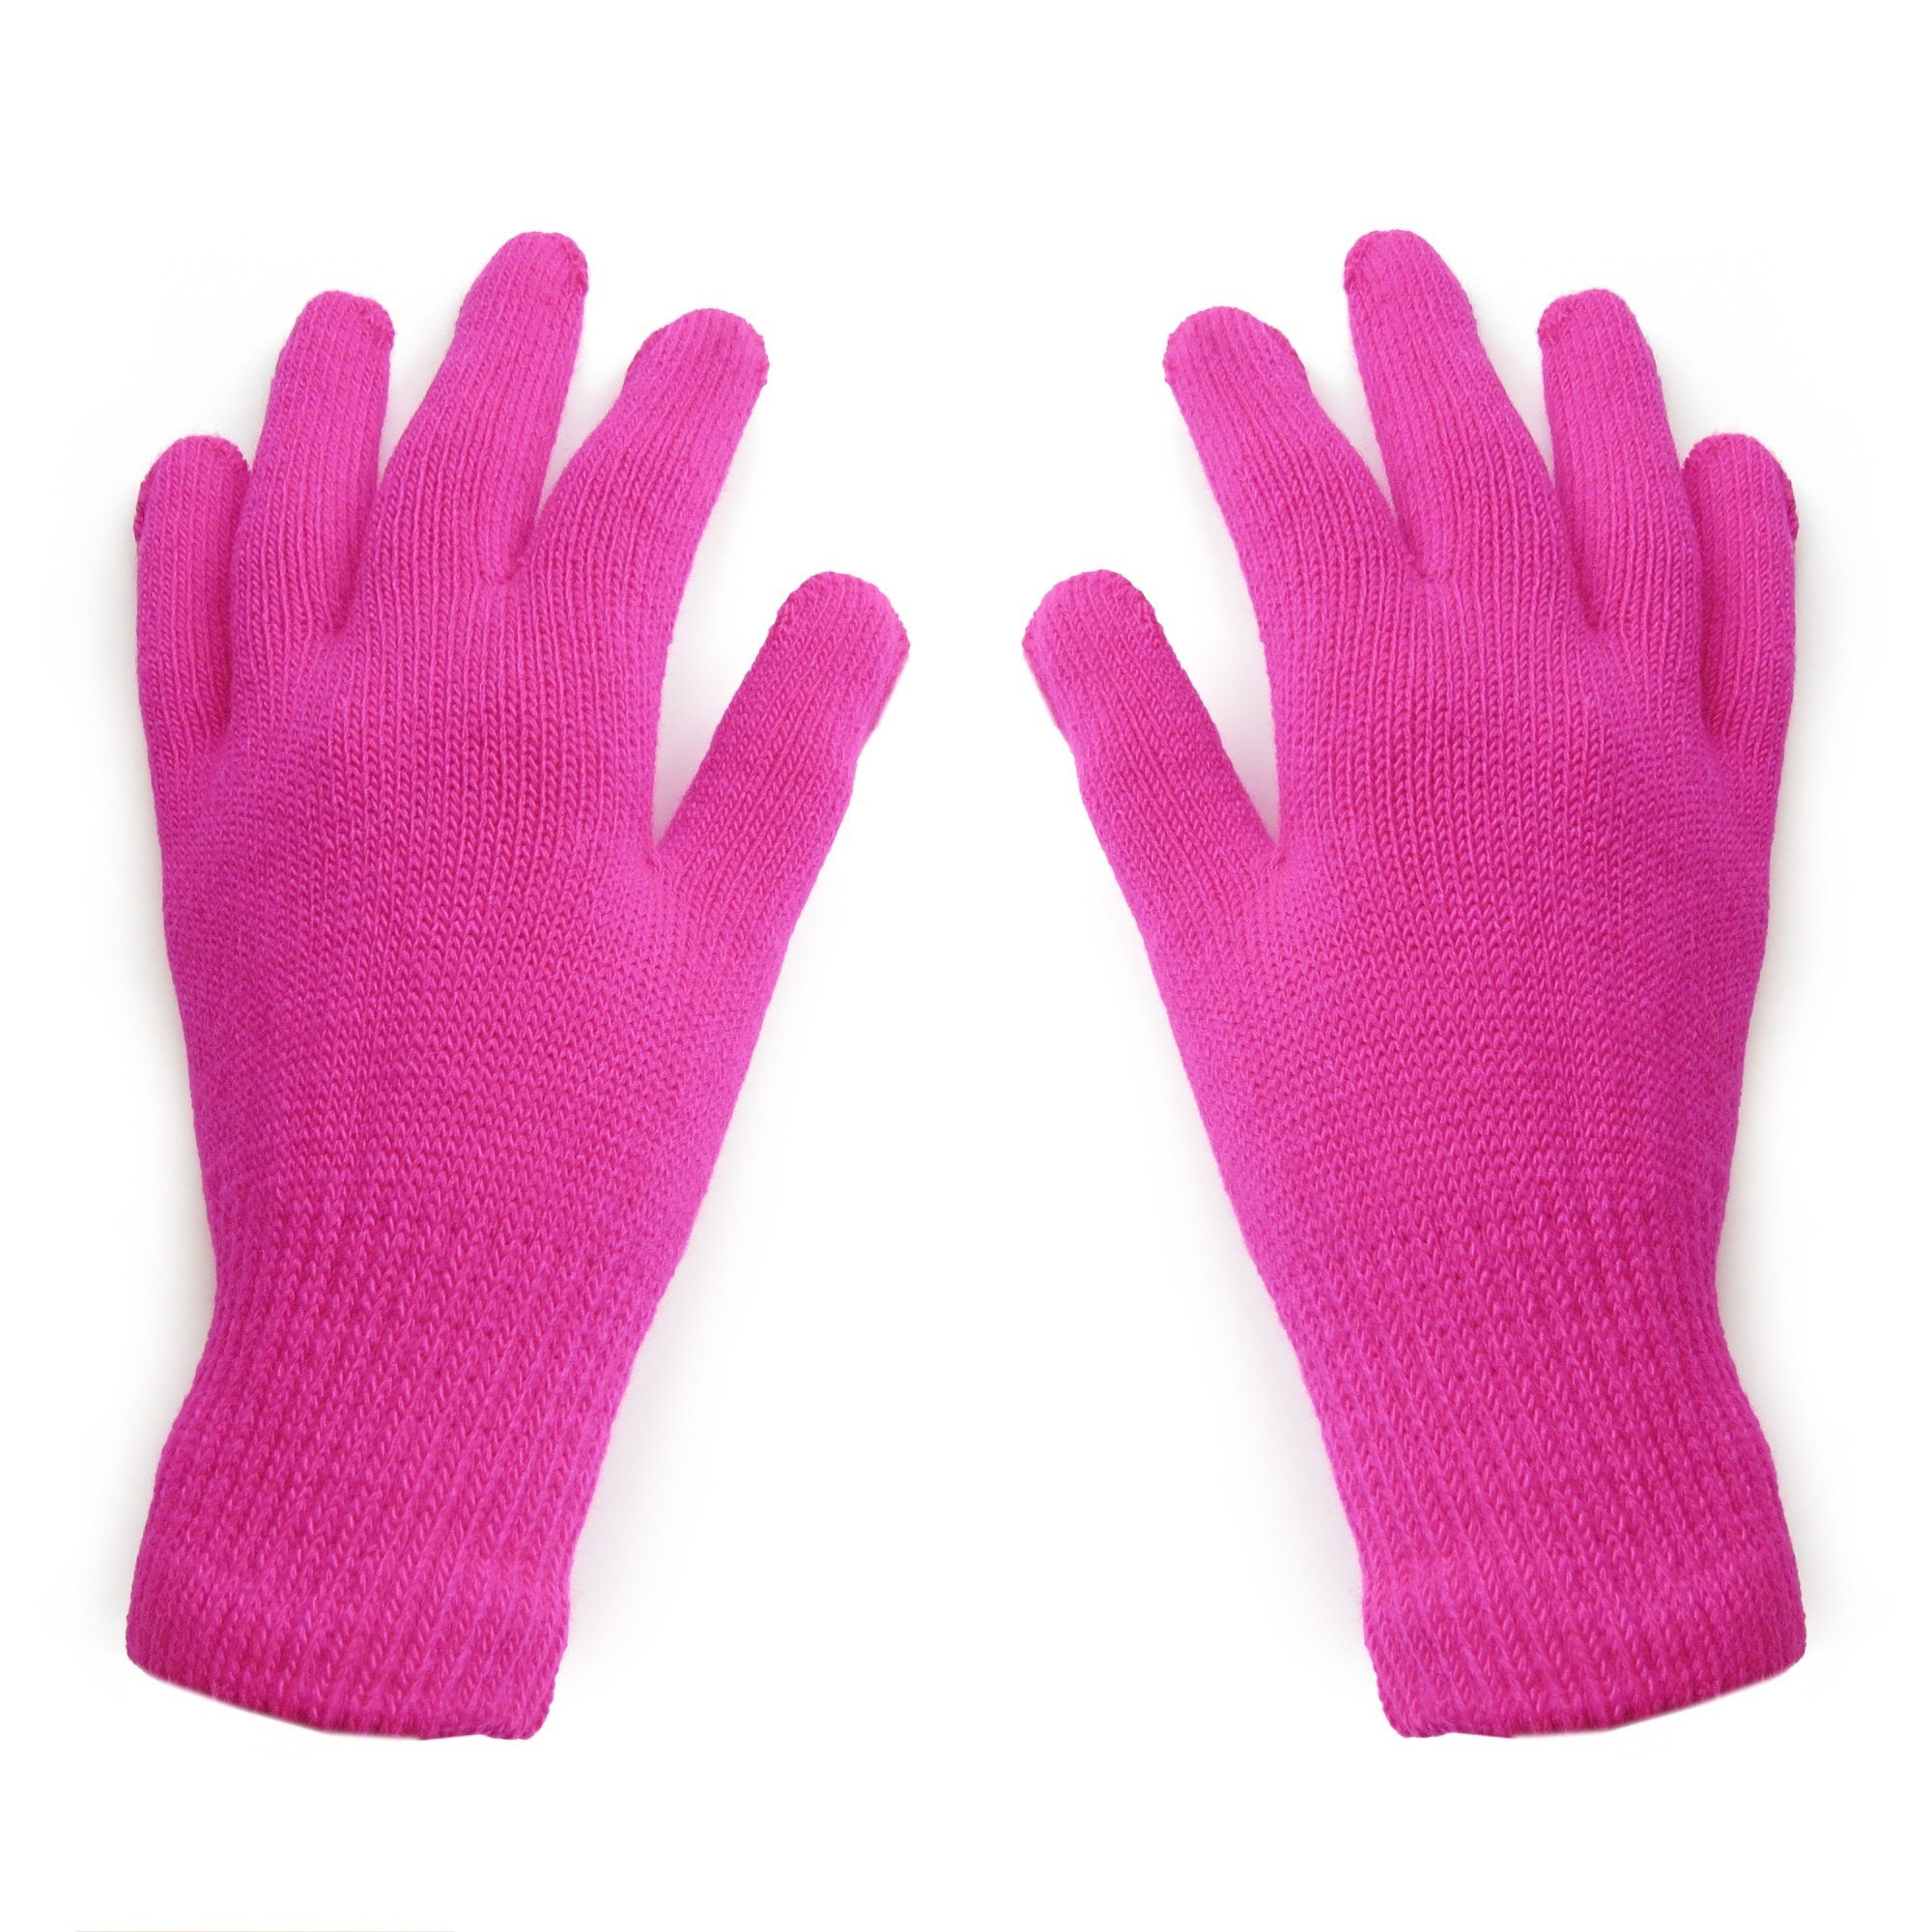 Sonia Originelli Strickhandschuhe Strickhandschuhe dehnbar ungefüttert knallig bunt unisex Neon Ungefüttert, pink Onesize